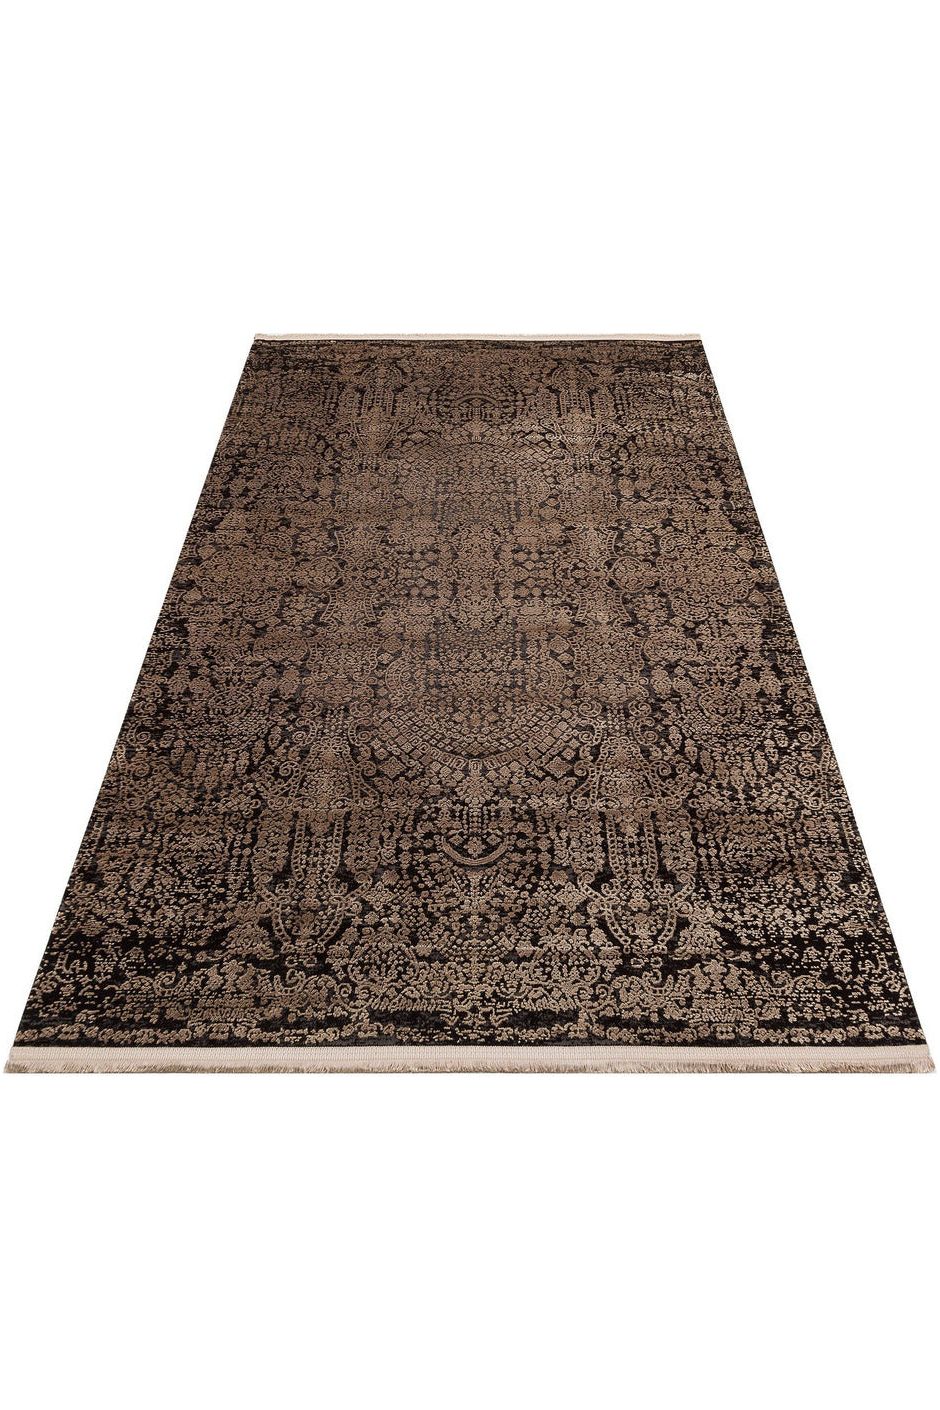 #Turkish_Carpets_Rugs# #Modern_Carpets# #Abrash_Carpets#Db 04 Antrasit Vizon